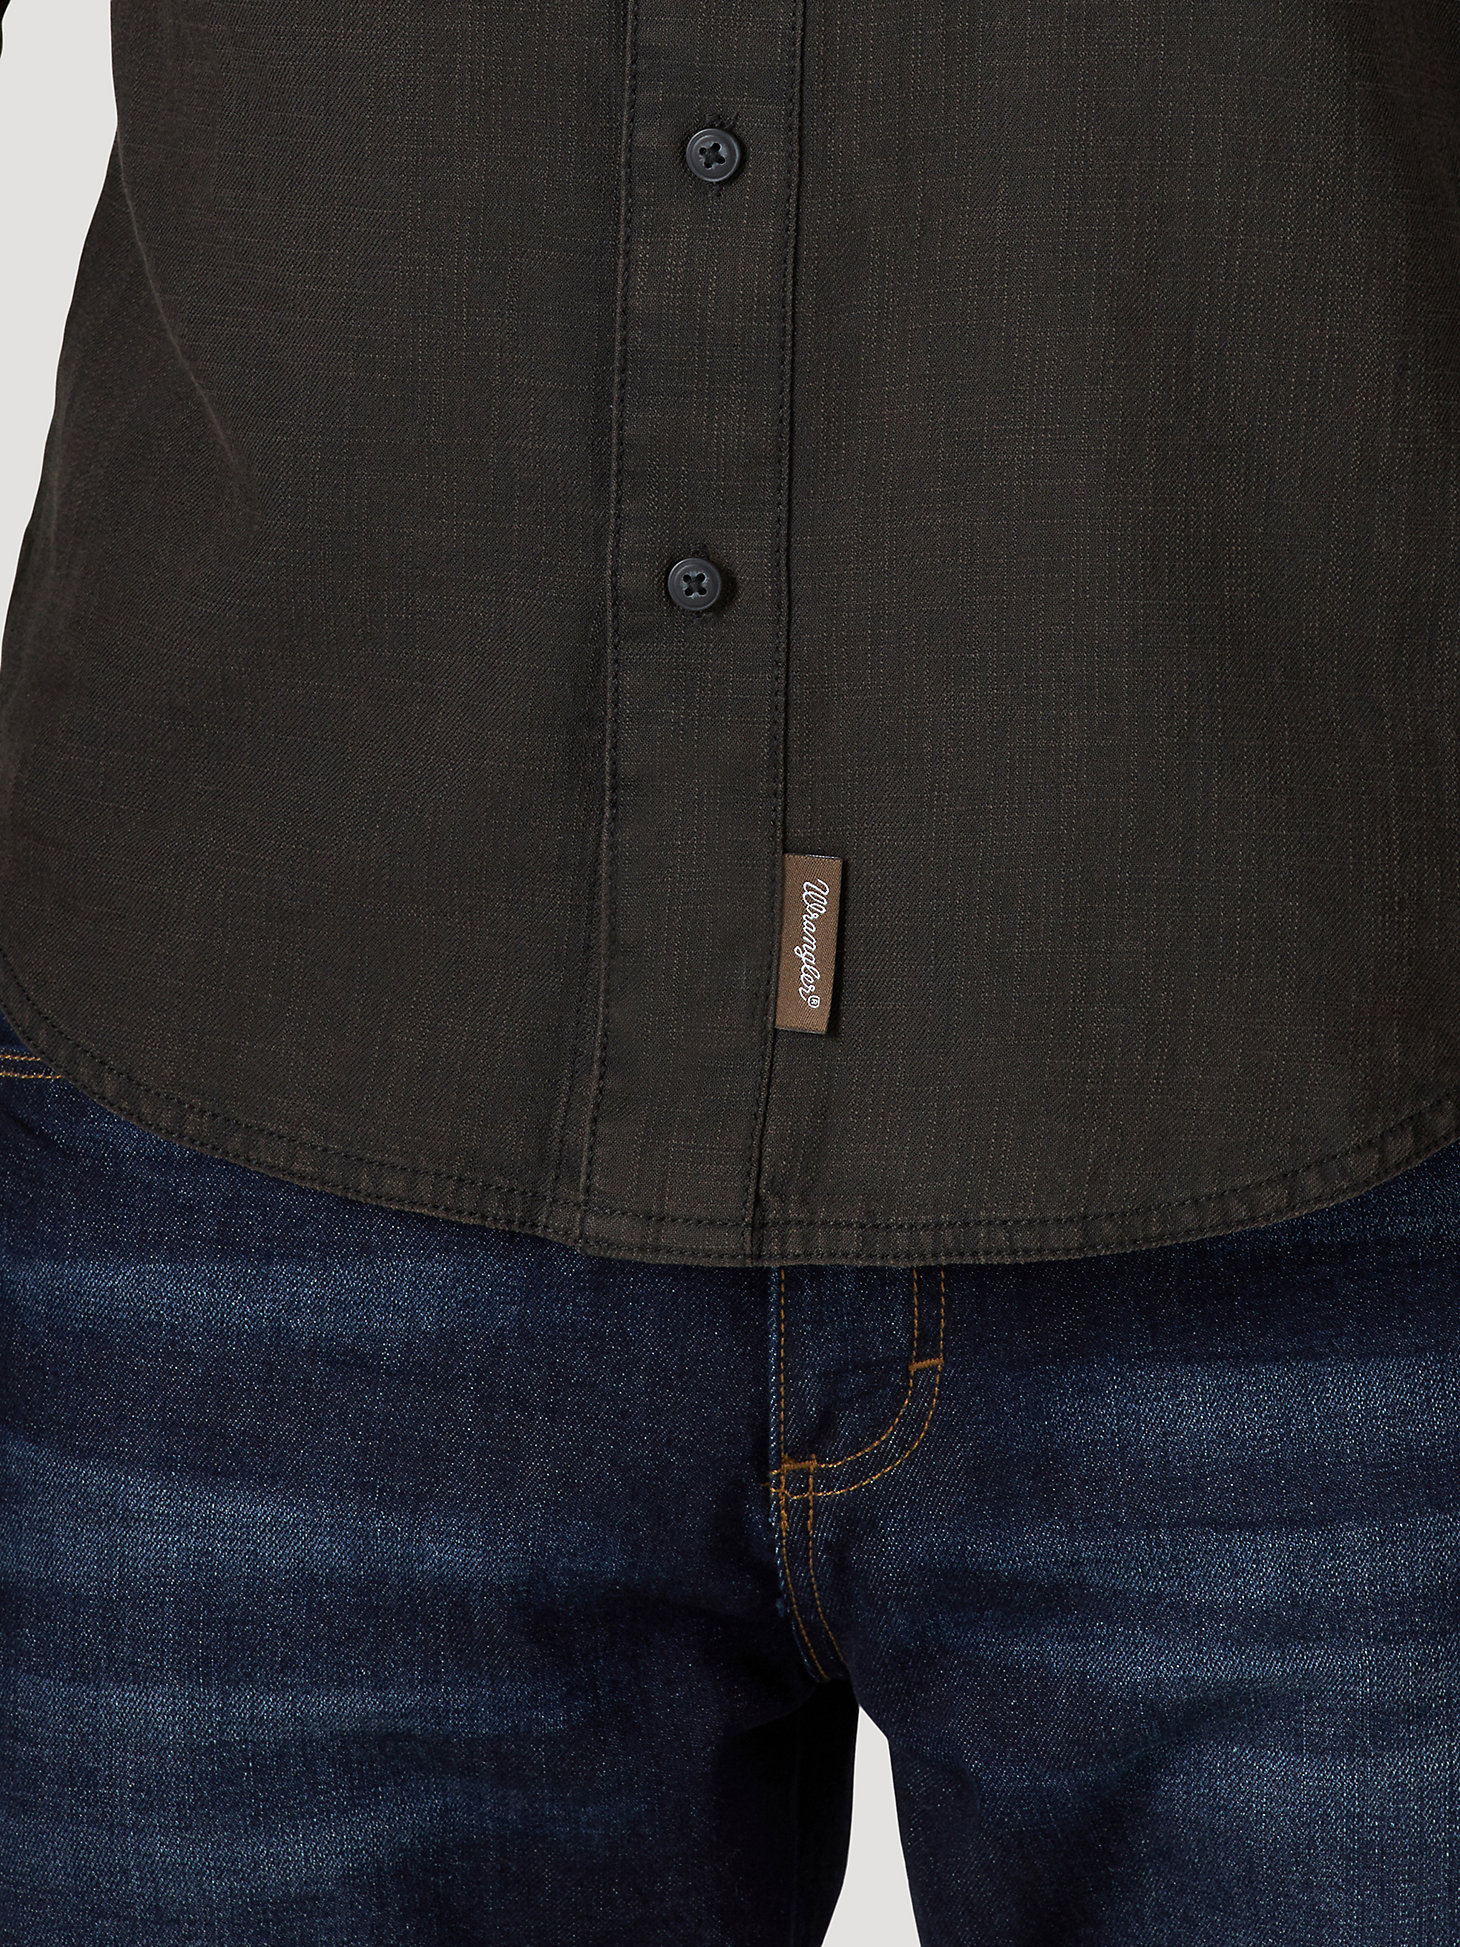 Men's Wrangler Retro® Premium Long Sleeve Button-Down Solid Shirt in Moonless Night alternative view 3